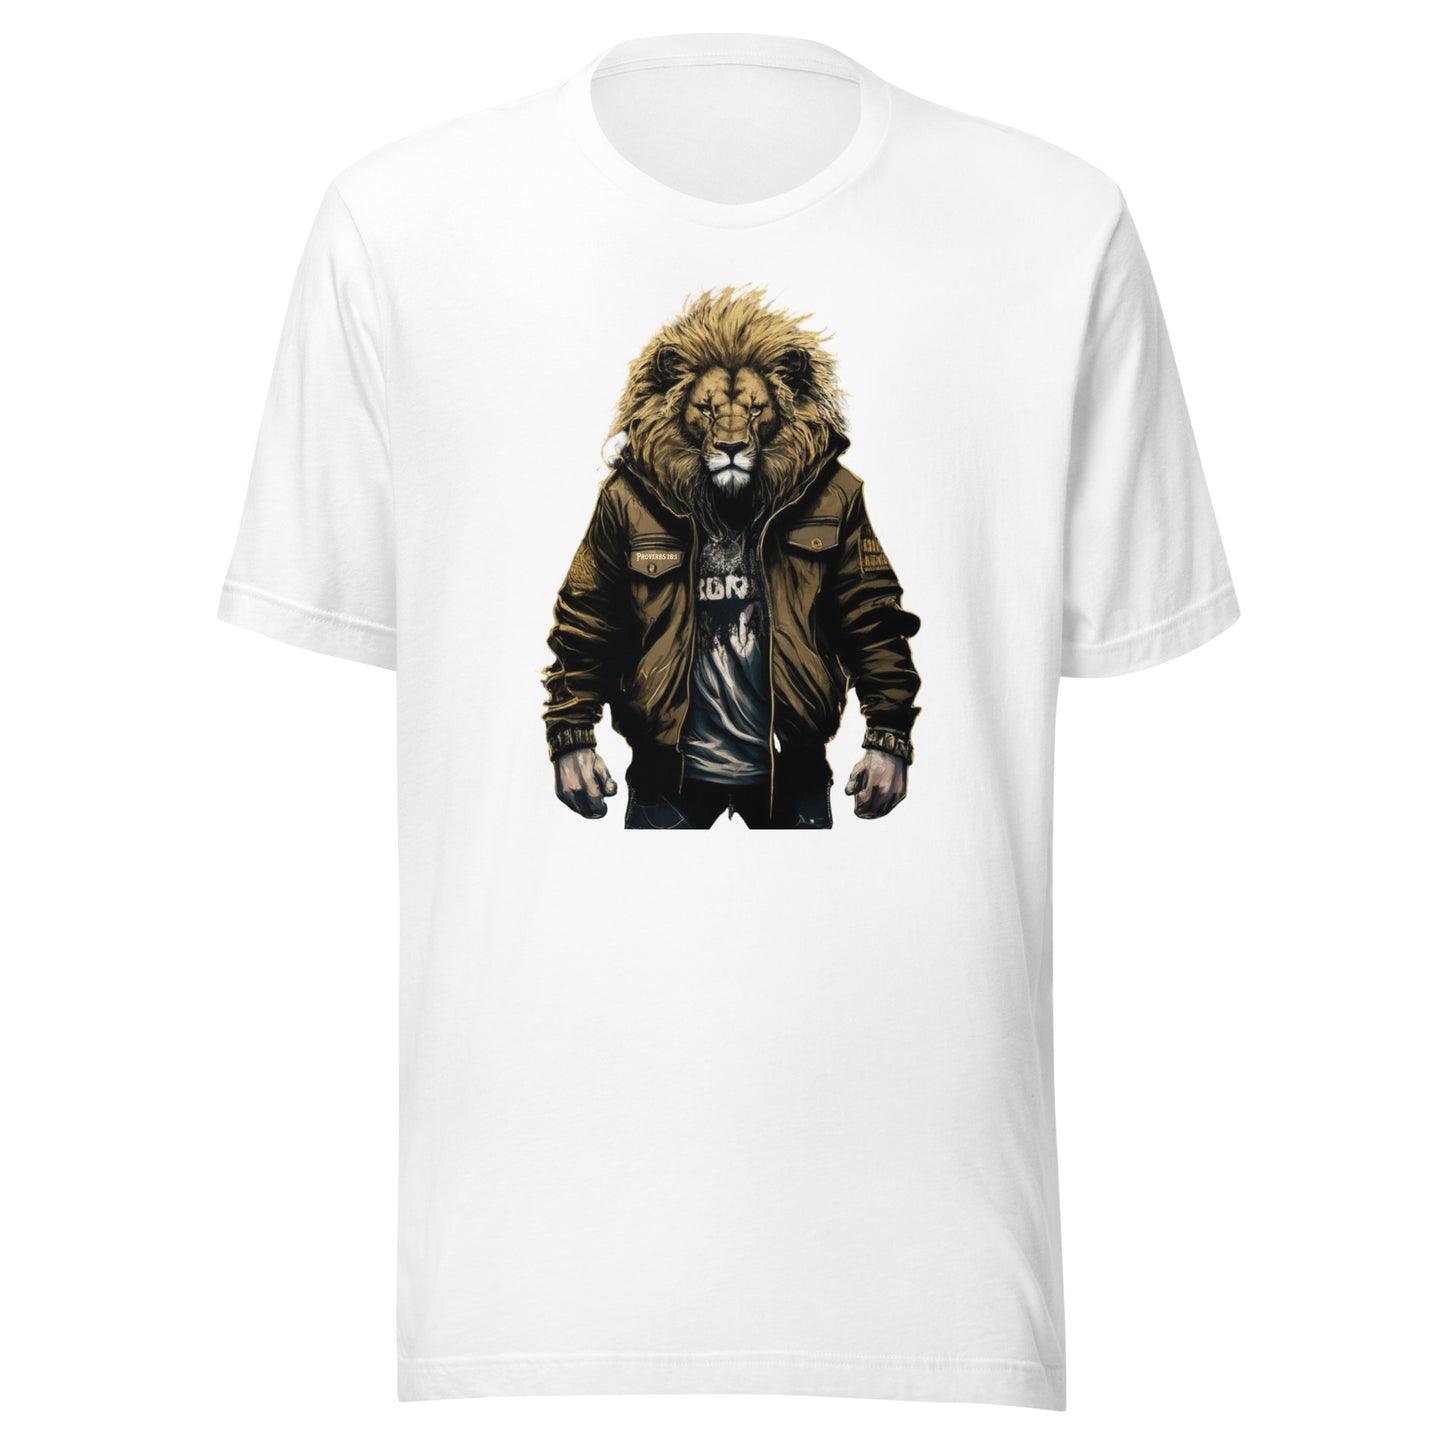 Bold Lion Men's Christian Graphic T-Shirt White